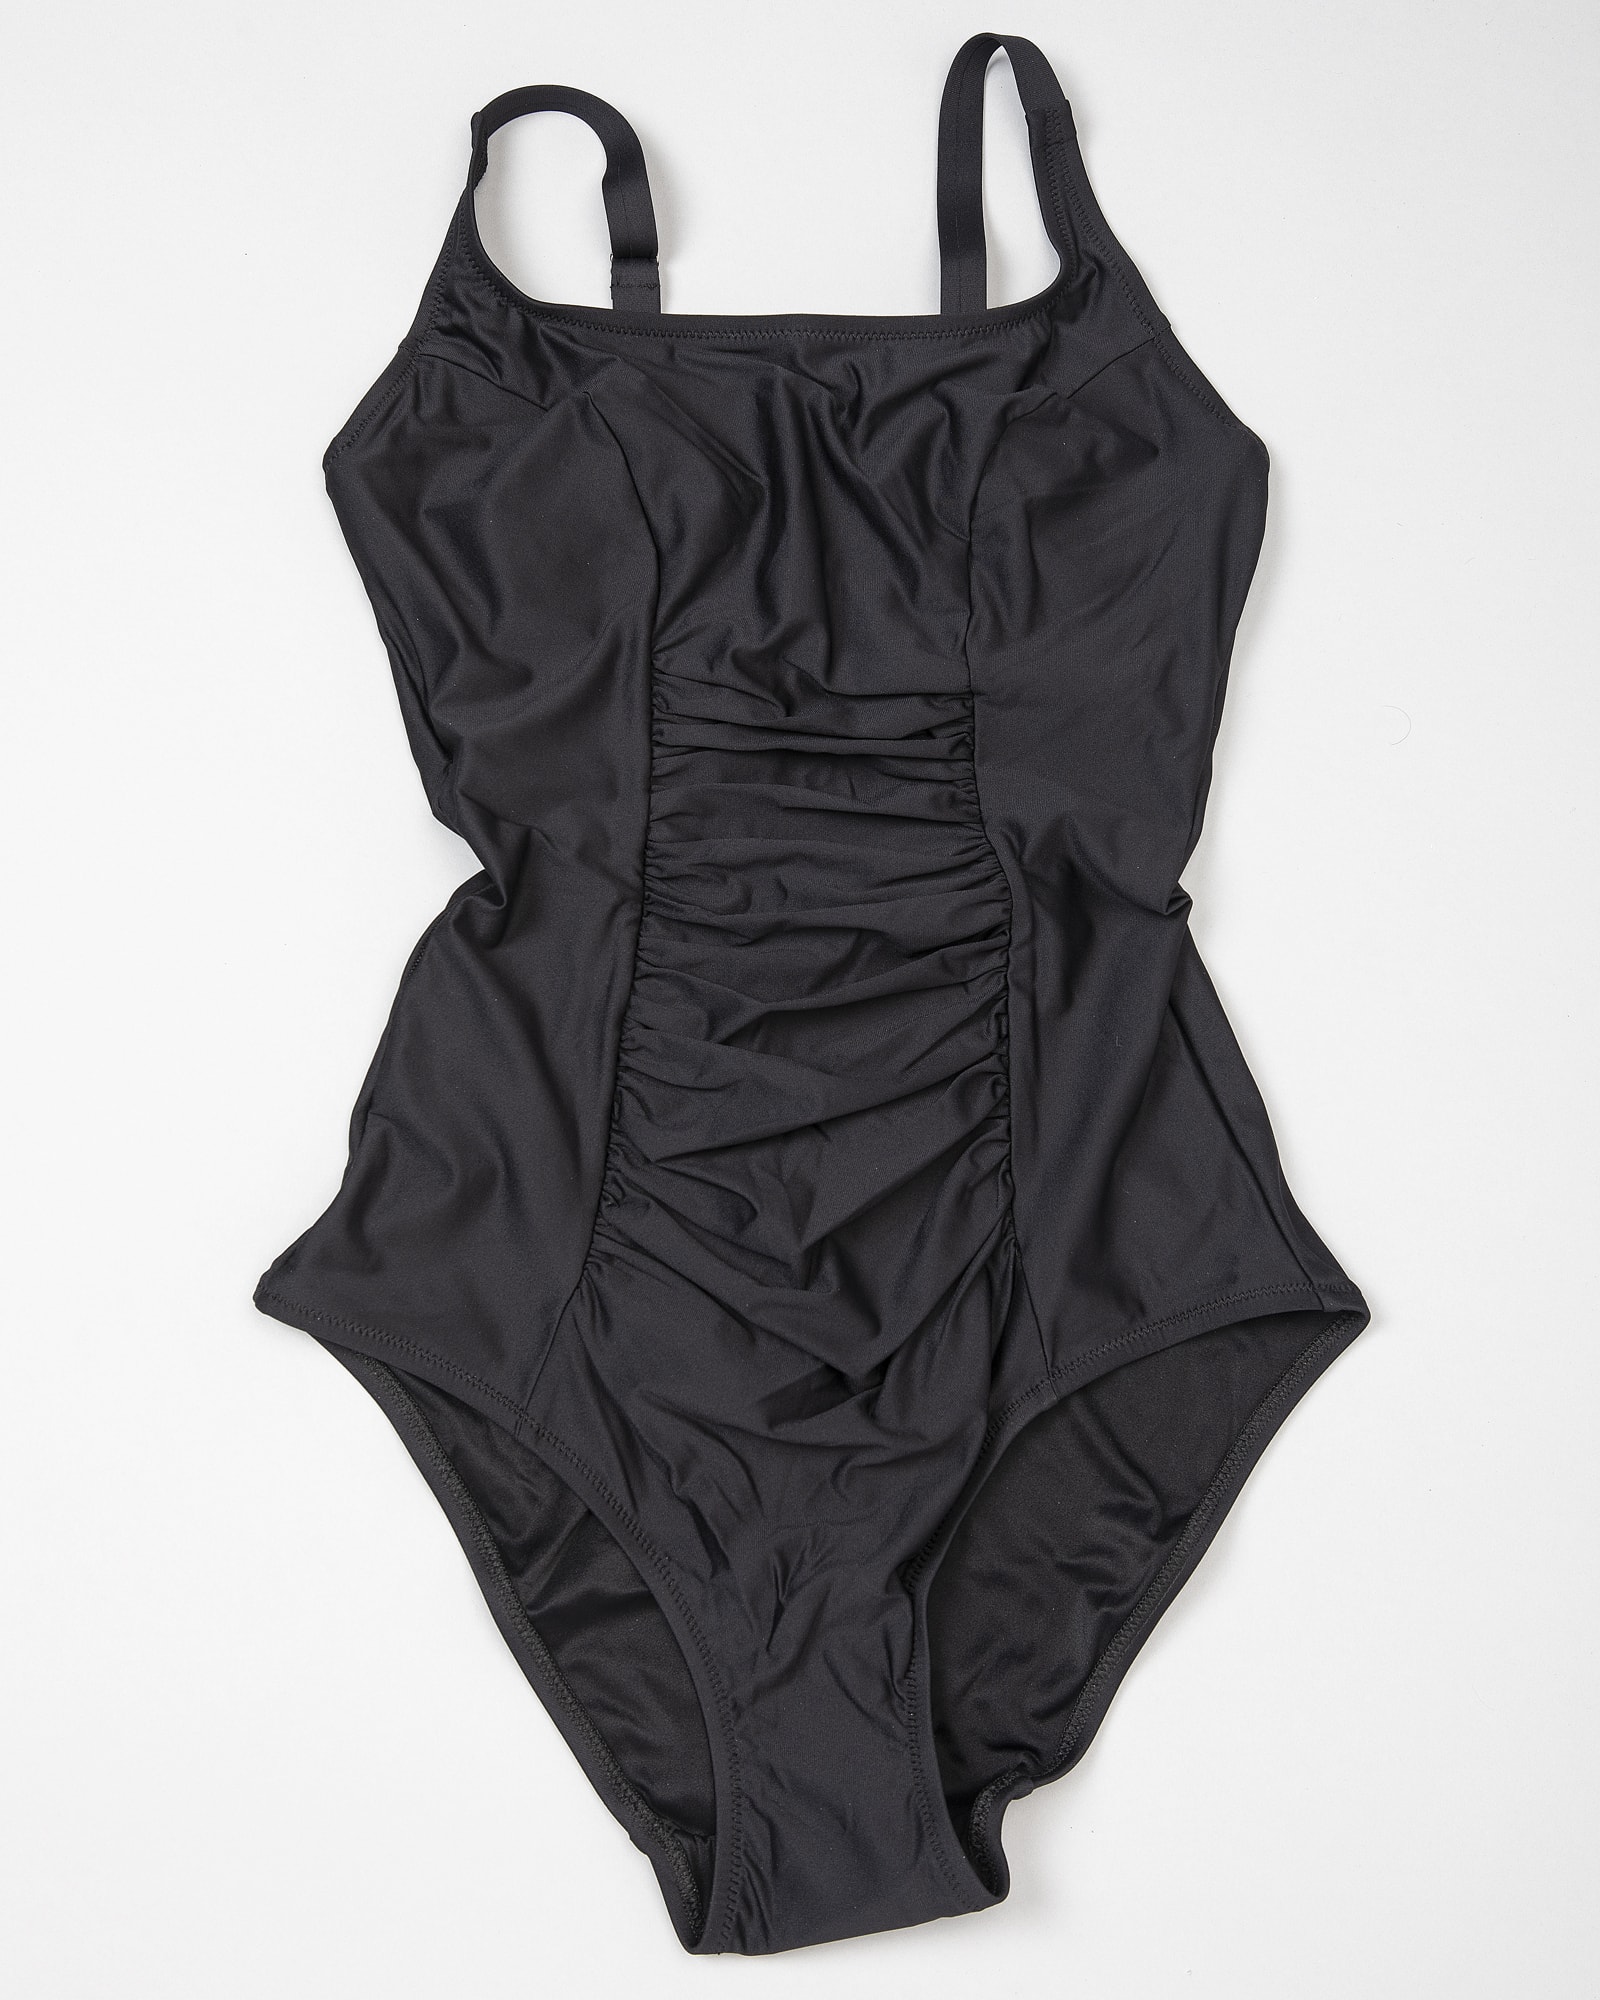 Antigel L'estivale Chic Swimsuit - Black fba6216-0005